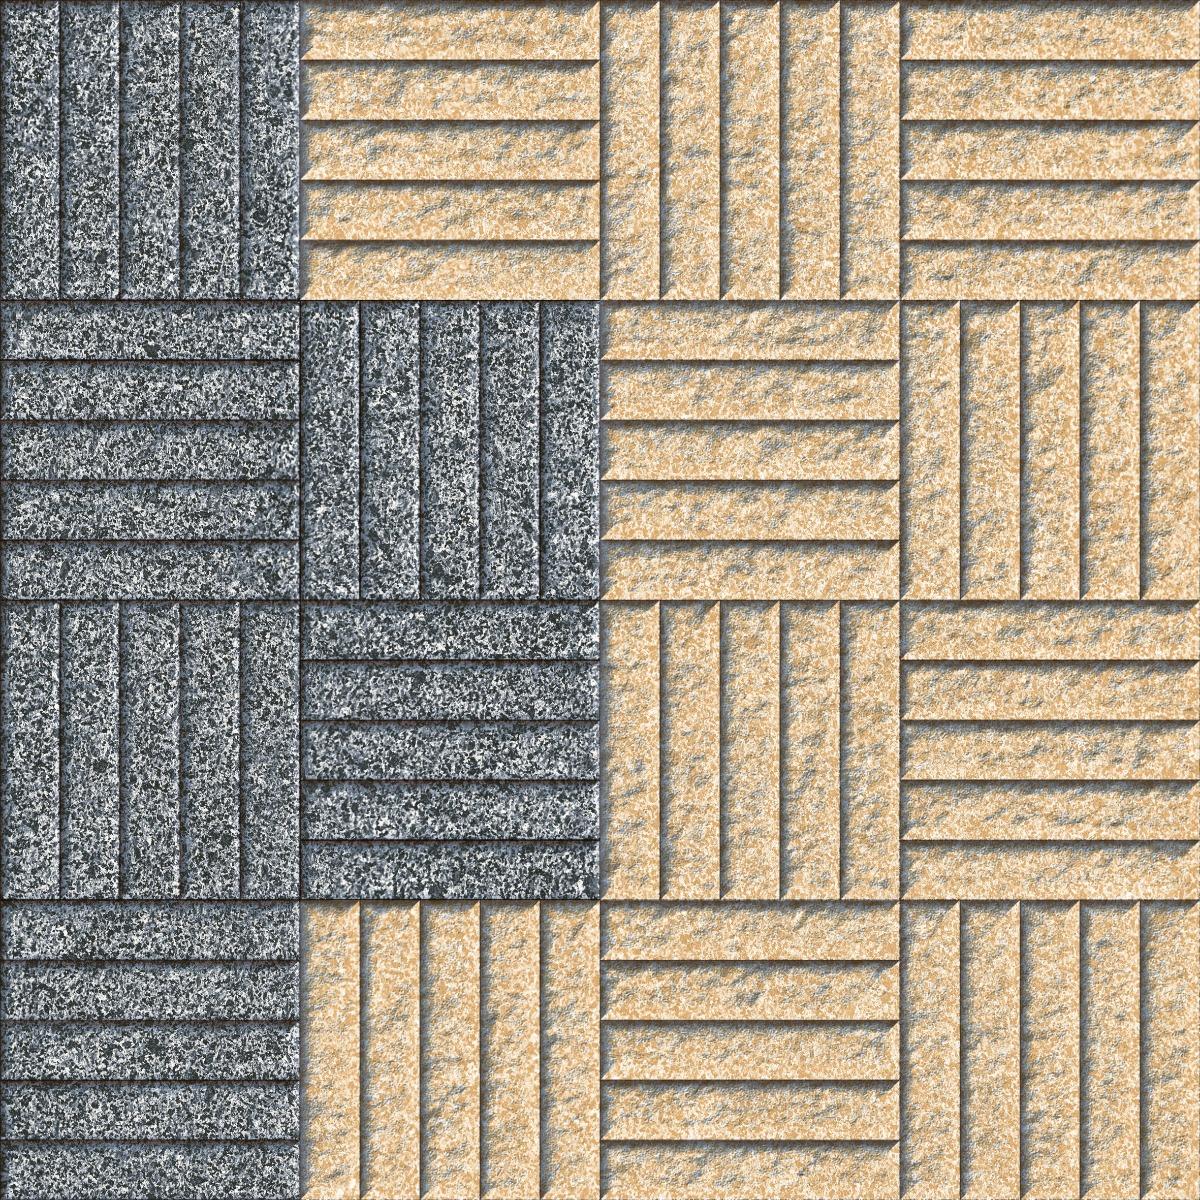 Floor Tiles for Commercial Tiles, Parking Tiles, Office Tiles, Pathway Tiles, Hospital Tiles, High Traffic Tiles, Bar/Restaurant, Outdoor Area, Porch/Parking